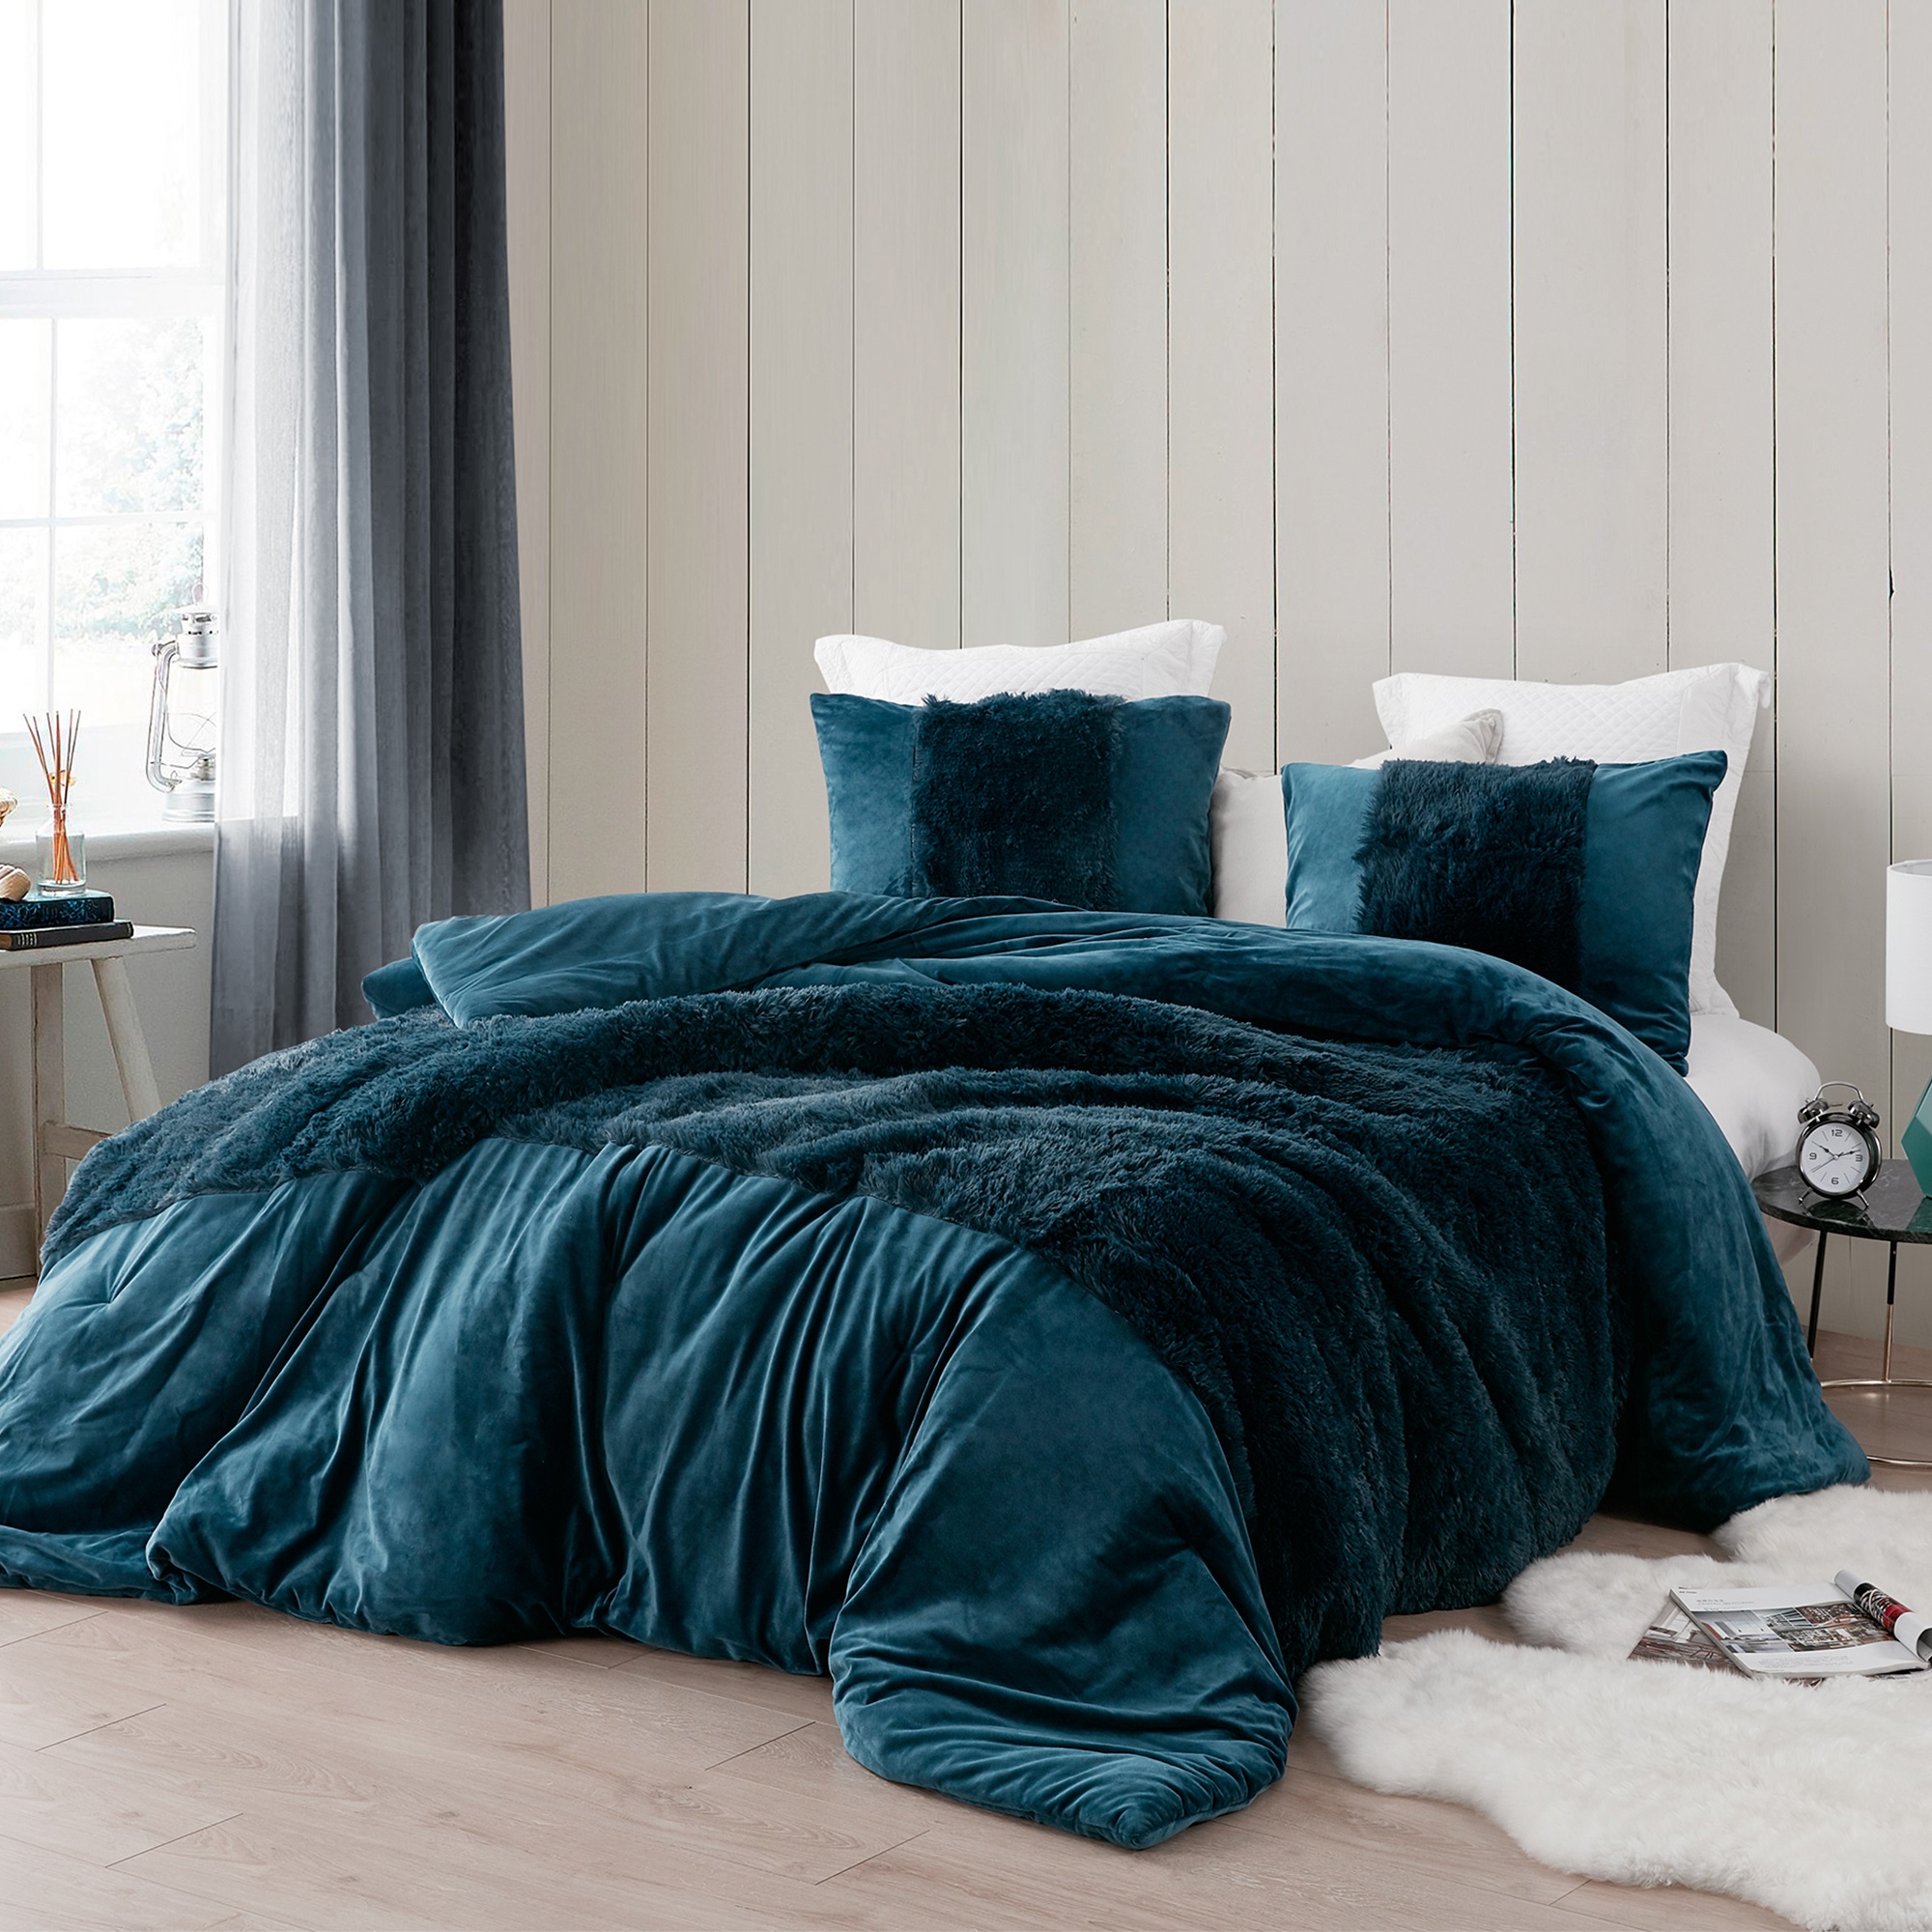 Coma Inducer® Oversized Comforter - Are You Kidding? - Nightfall Navy